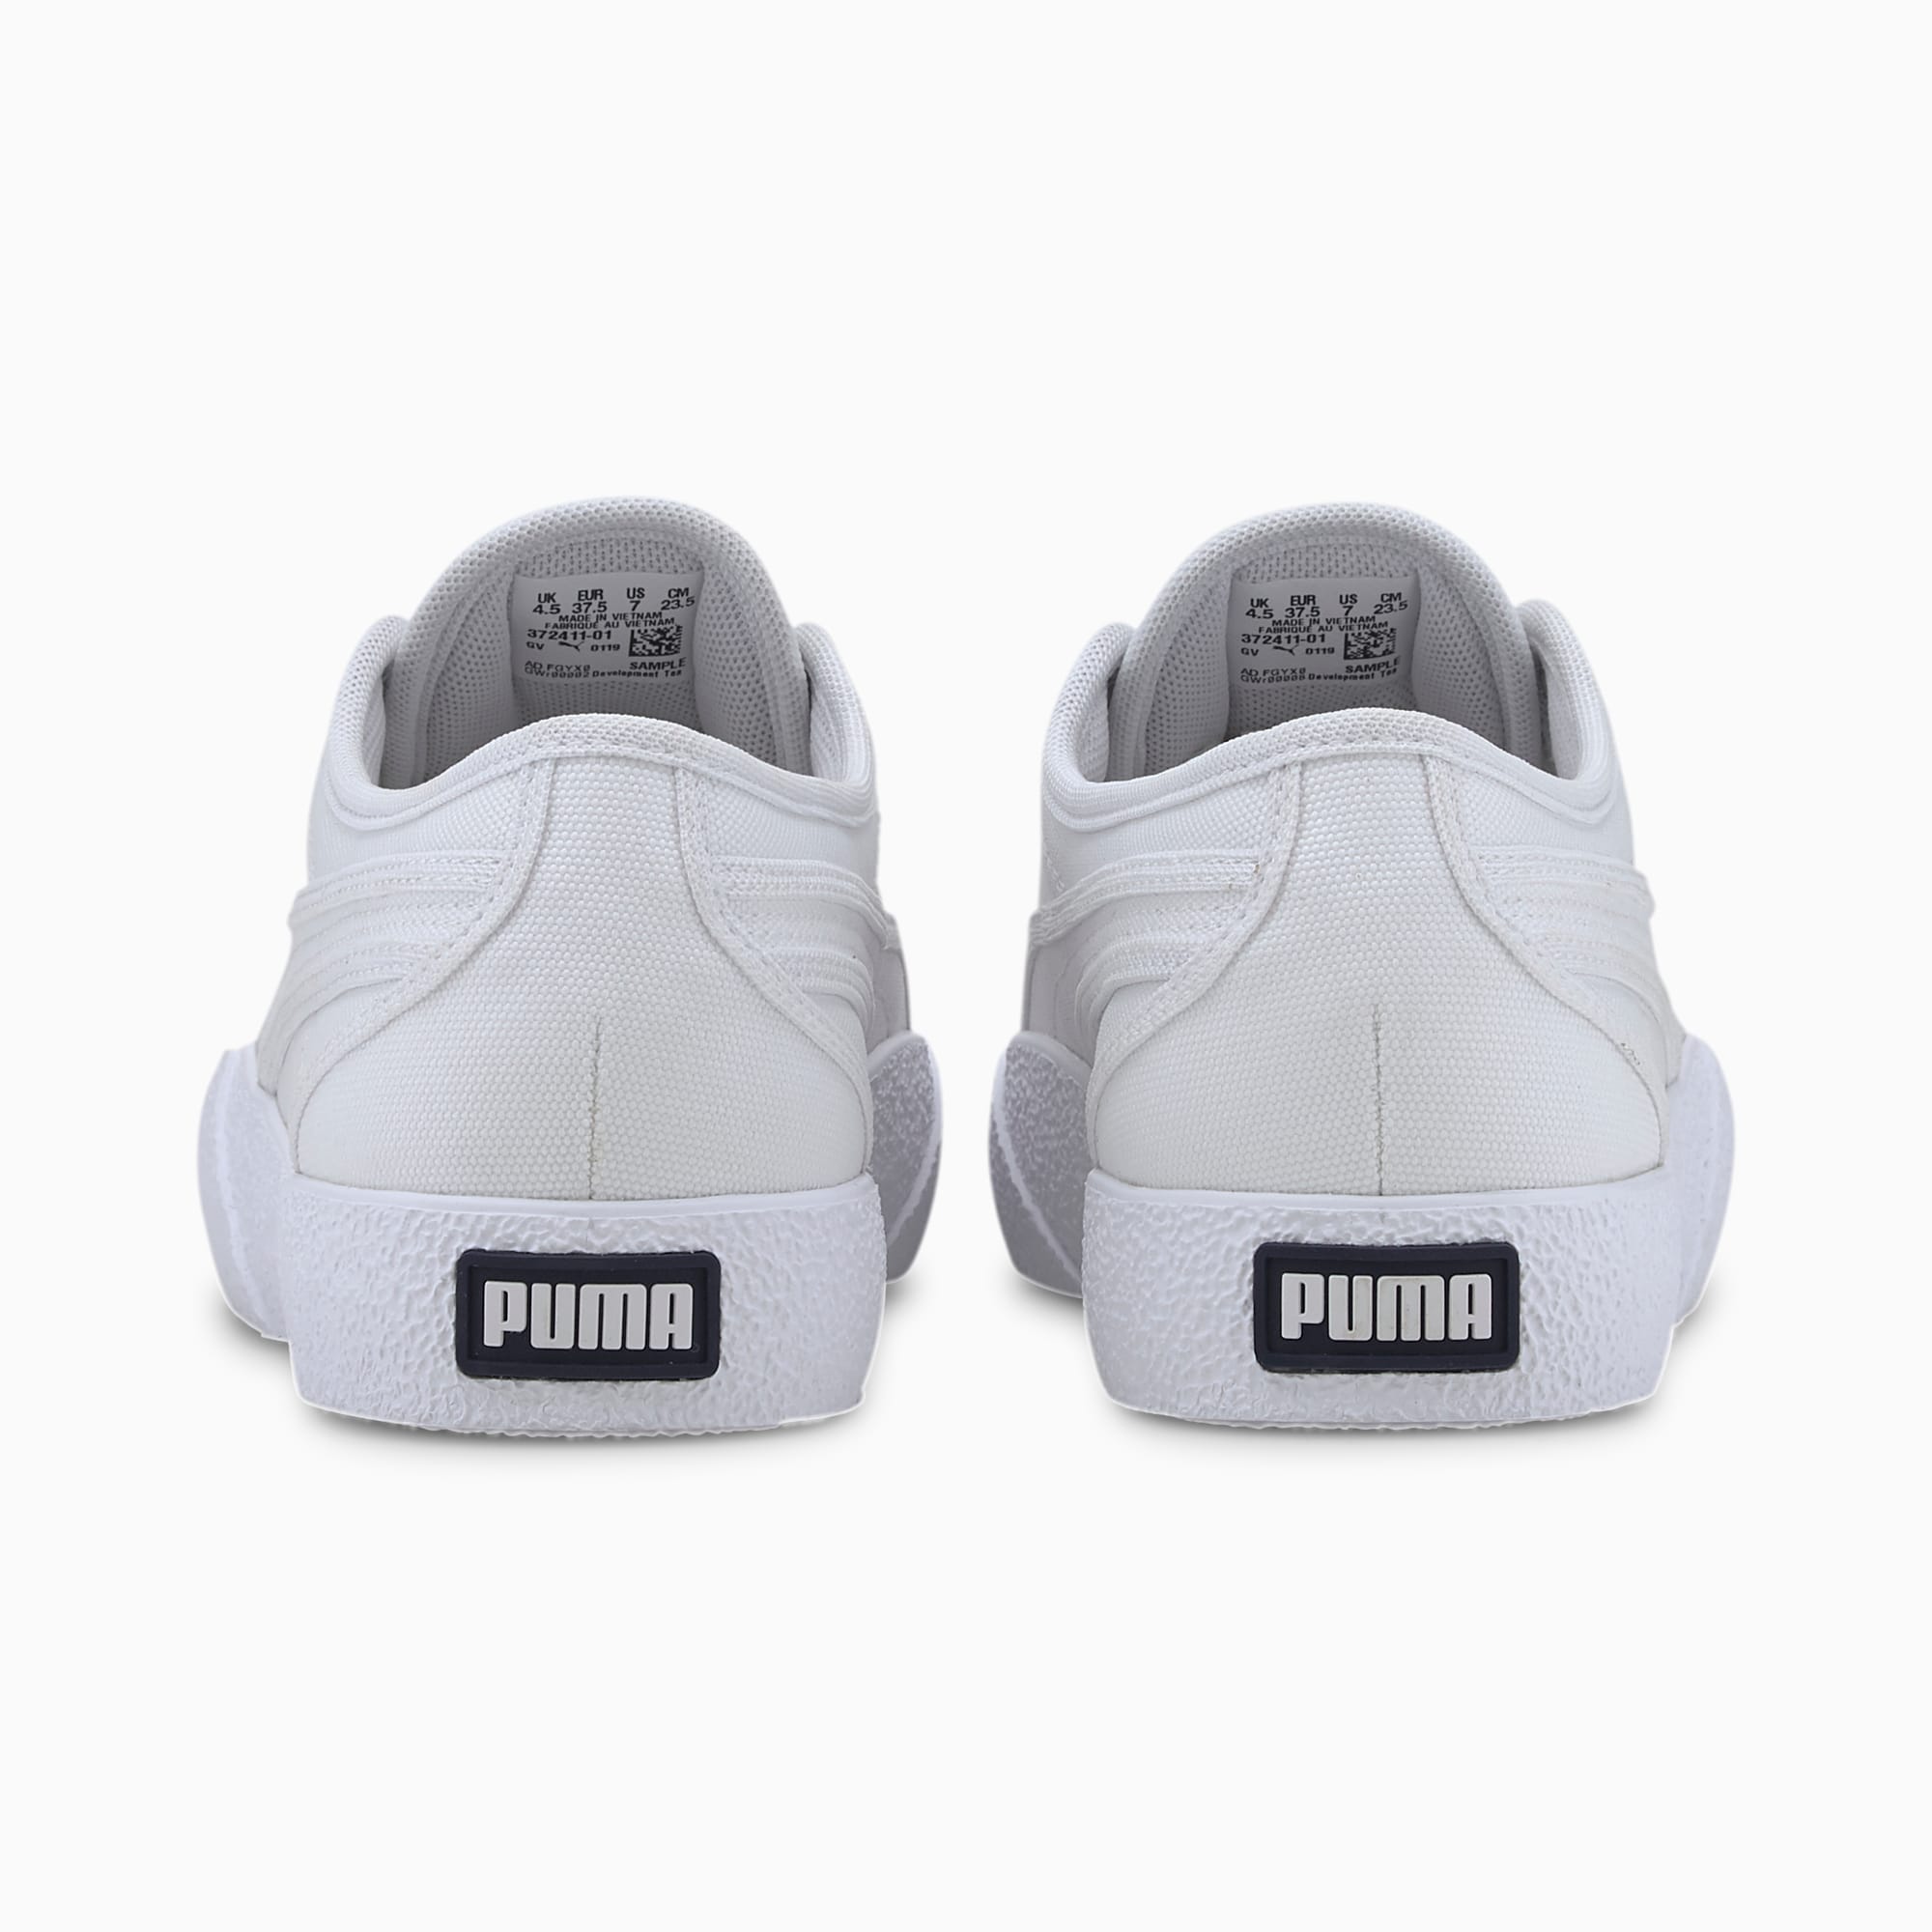 puma canvas shoes jabong